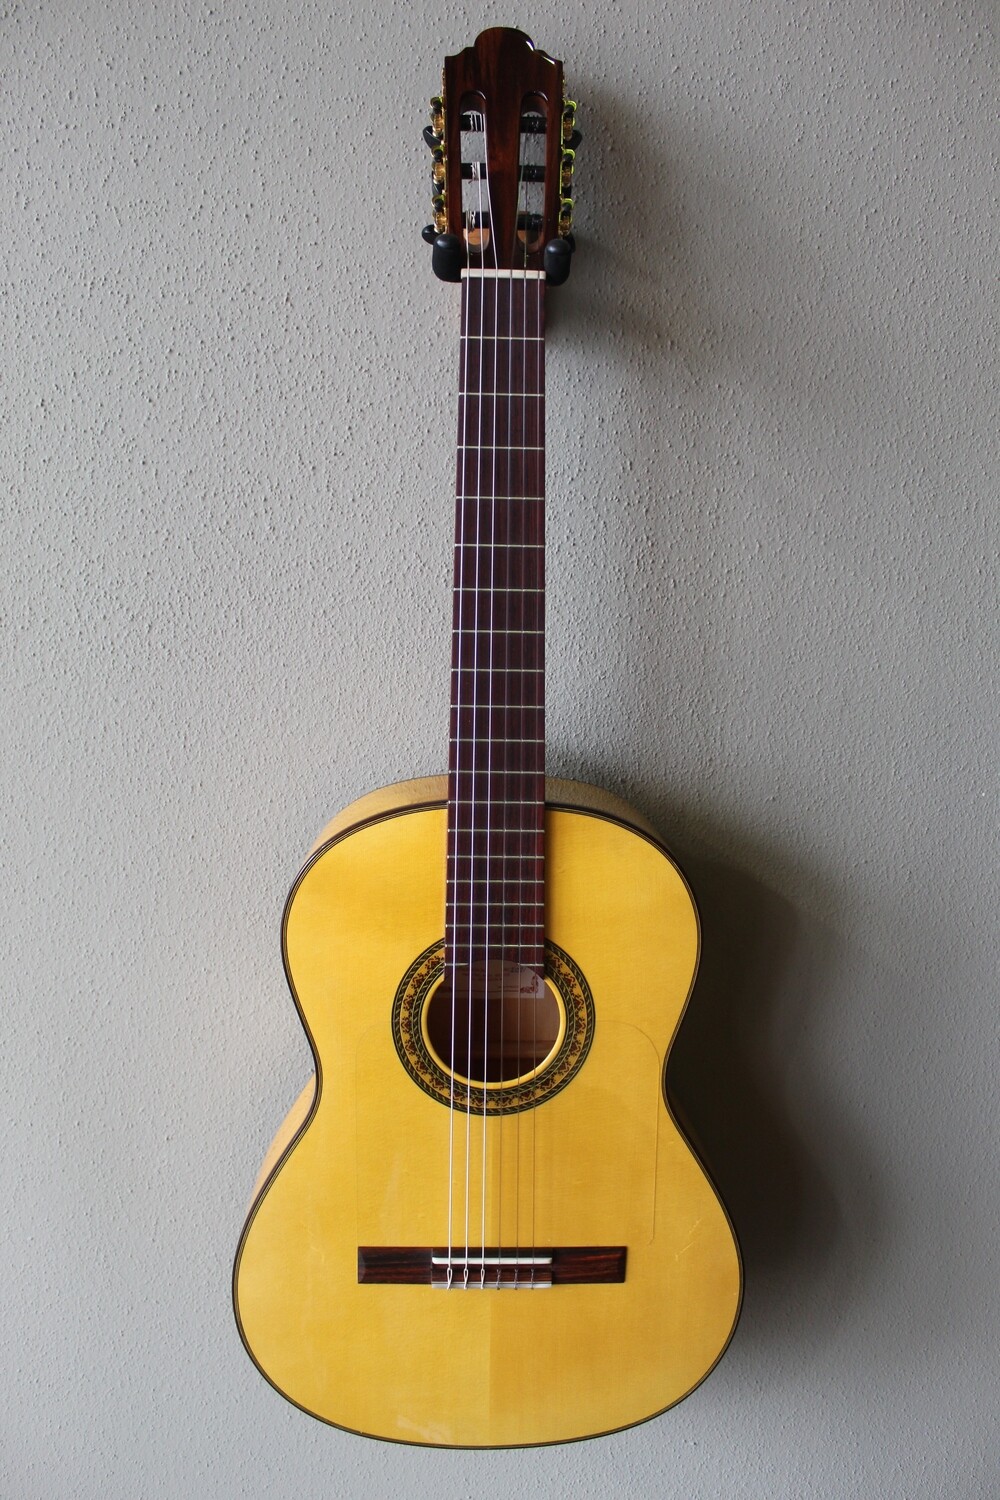 Marlon (Francisco) Navarro Flamenco Blanca Guitar - 640 Scale